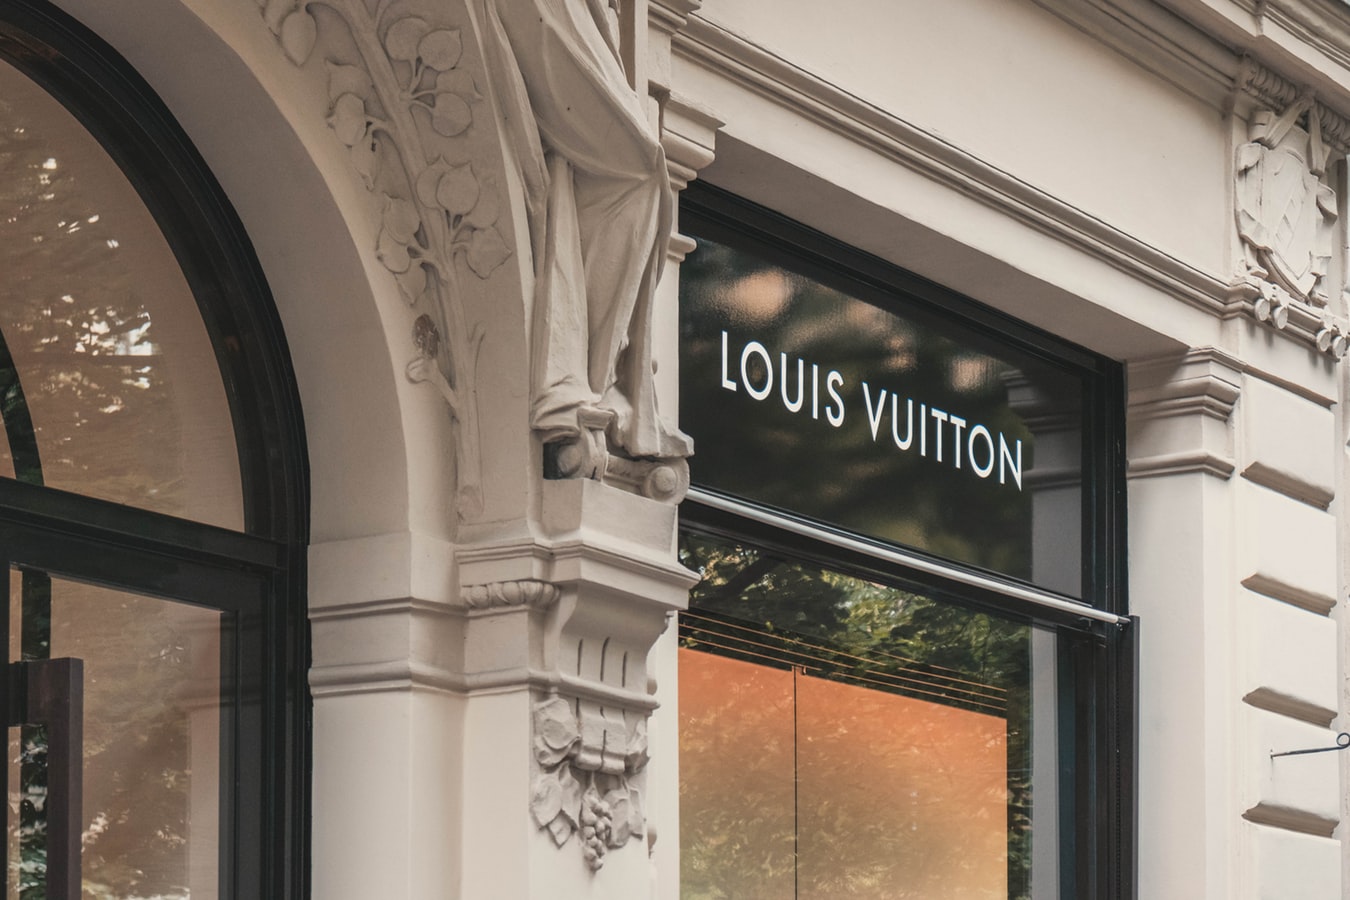 Louis Vuitton joins China's JD.com amid online luxury battle